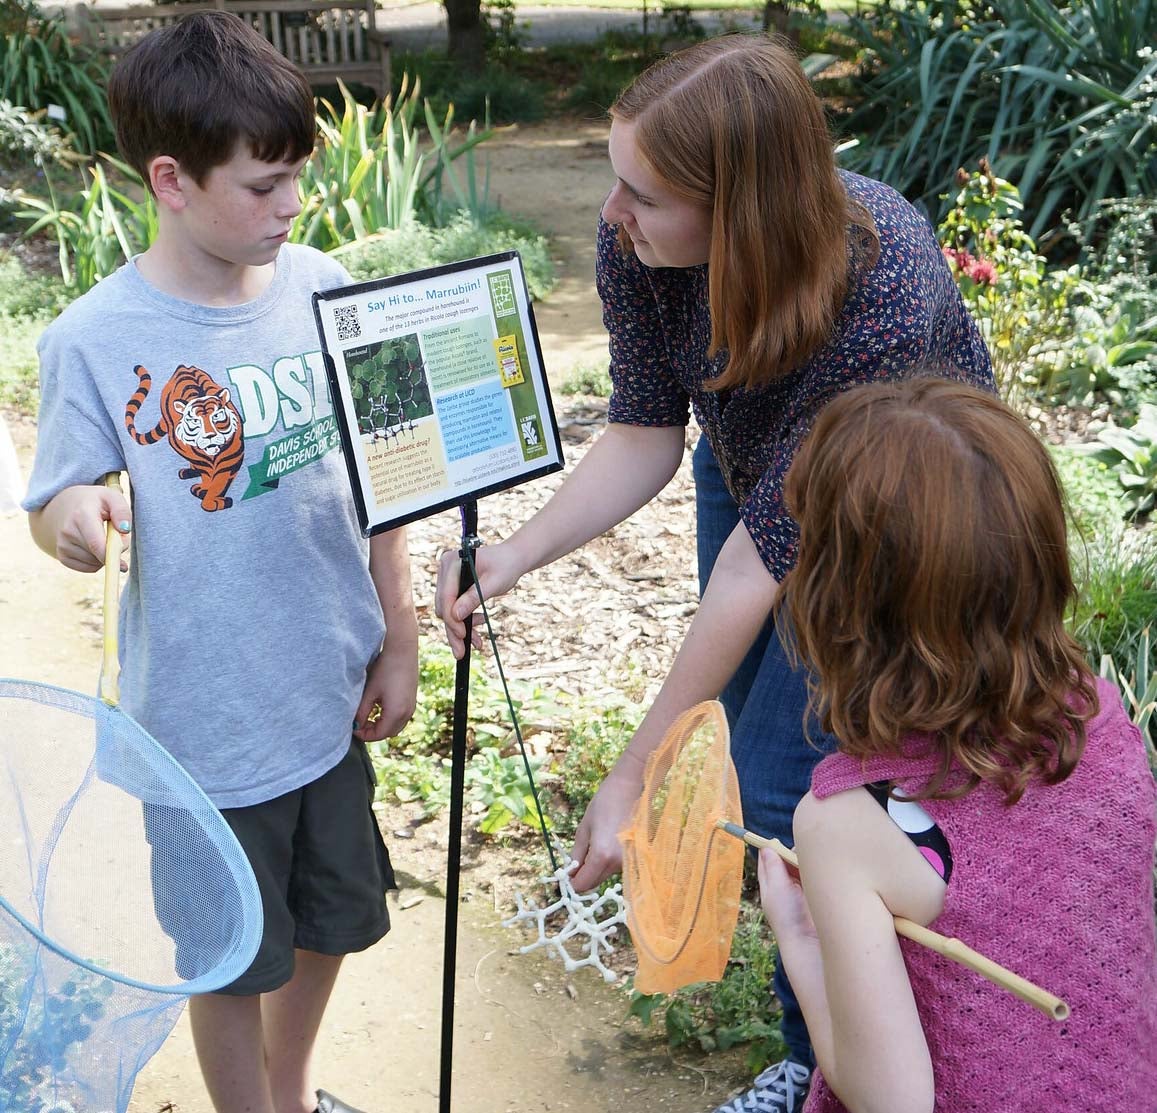 Children look at a garden with a UC Davis student